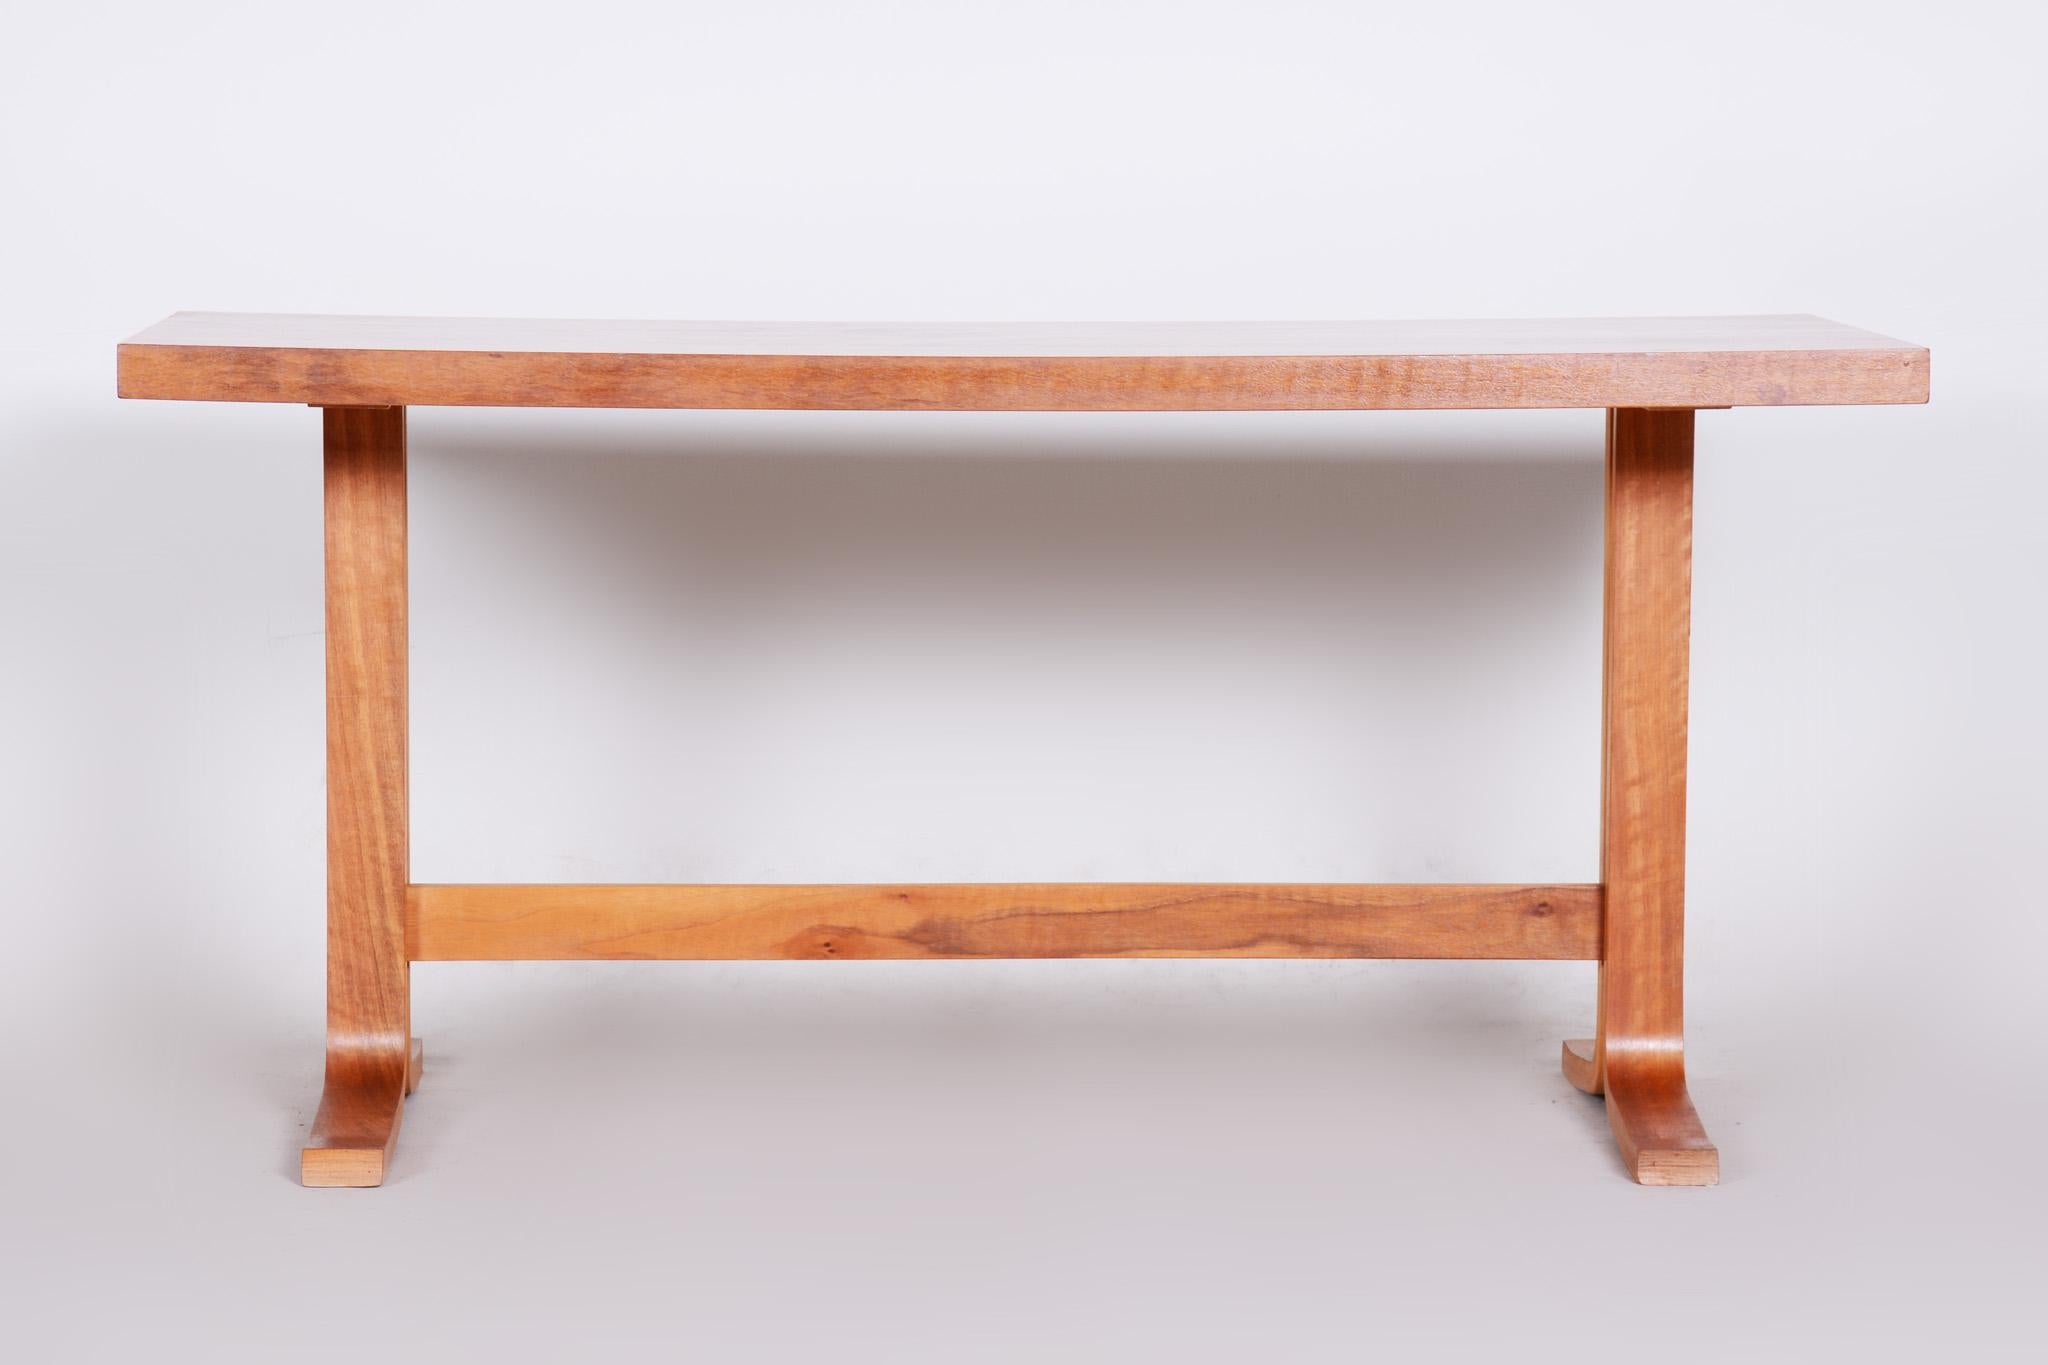 Original Rectangular Oak Table, Czech Mid-Century Modern, 1960s In Good Condition For Sale In Horomerice, CZ